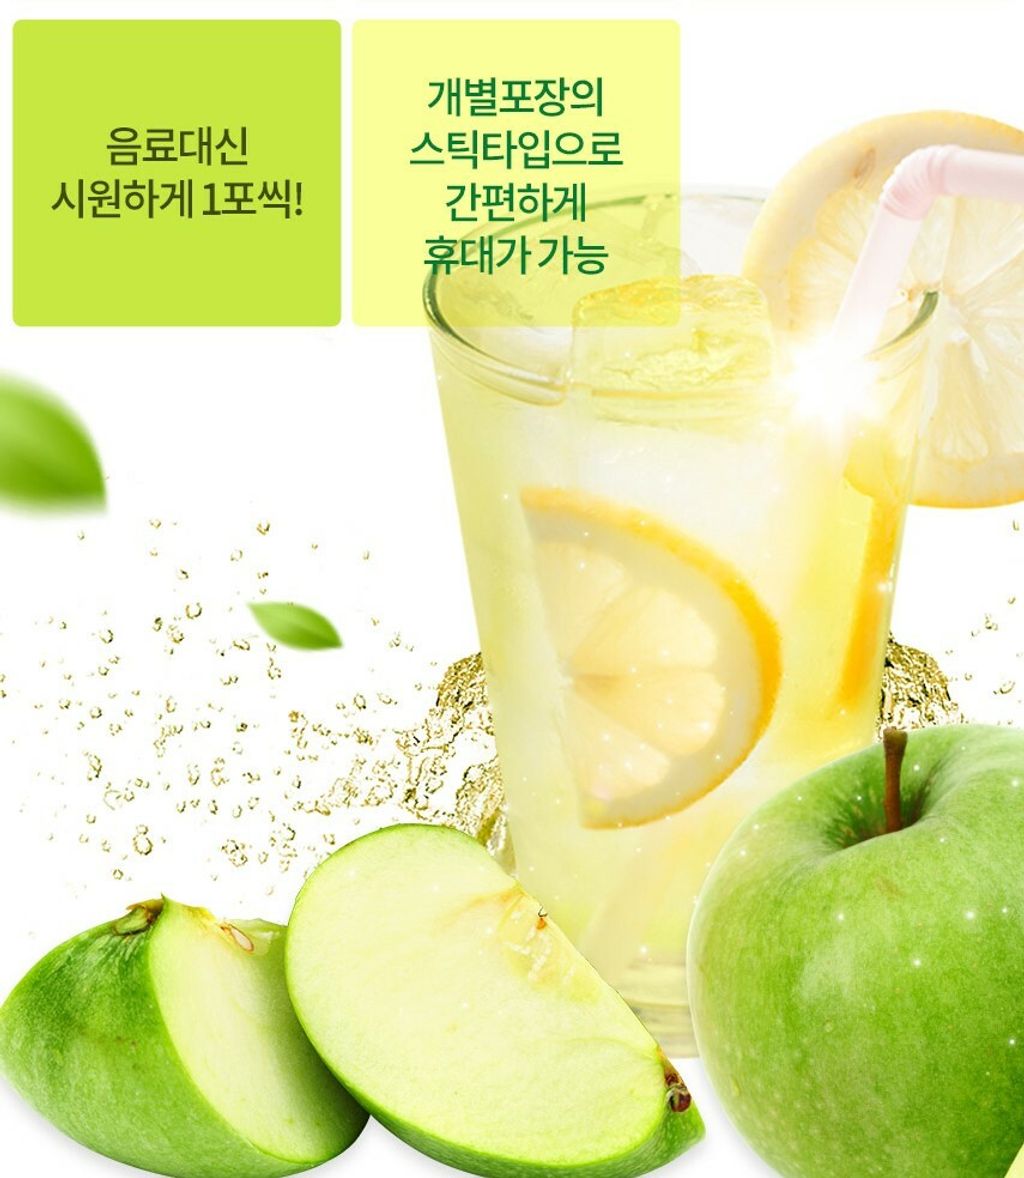 JuzBeauty_JuzBeautyMalaysia_JuzPretty_Authentic_Kbeauty_Malaysia_Jbeauty_Australia_Health_Care_Nature_Dream_Sparkling_Lemon_Green_Apple_Daily-Tok_ (5).jpg